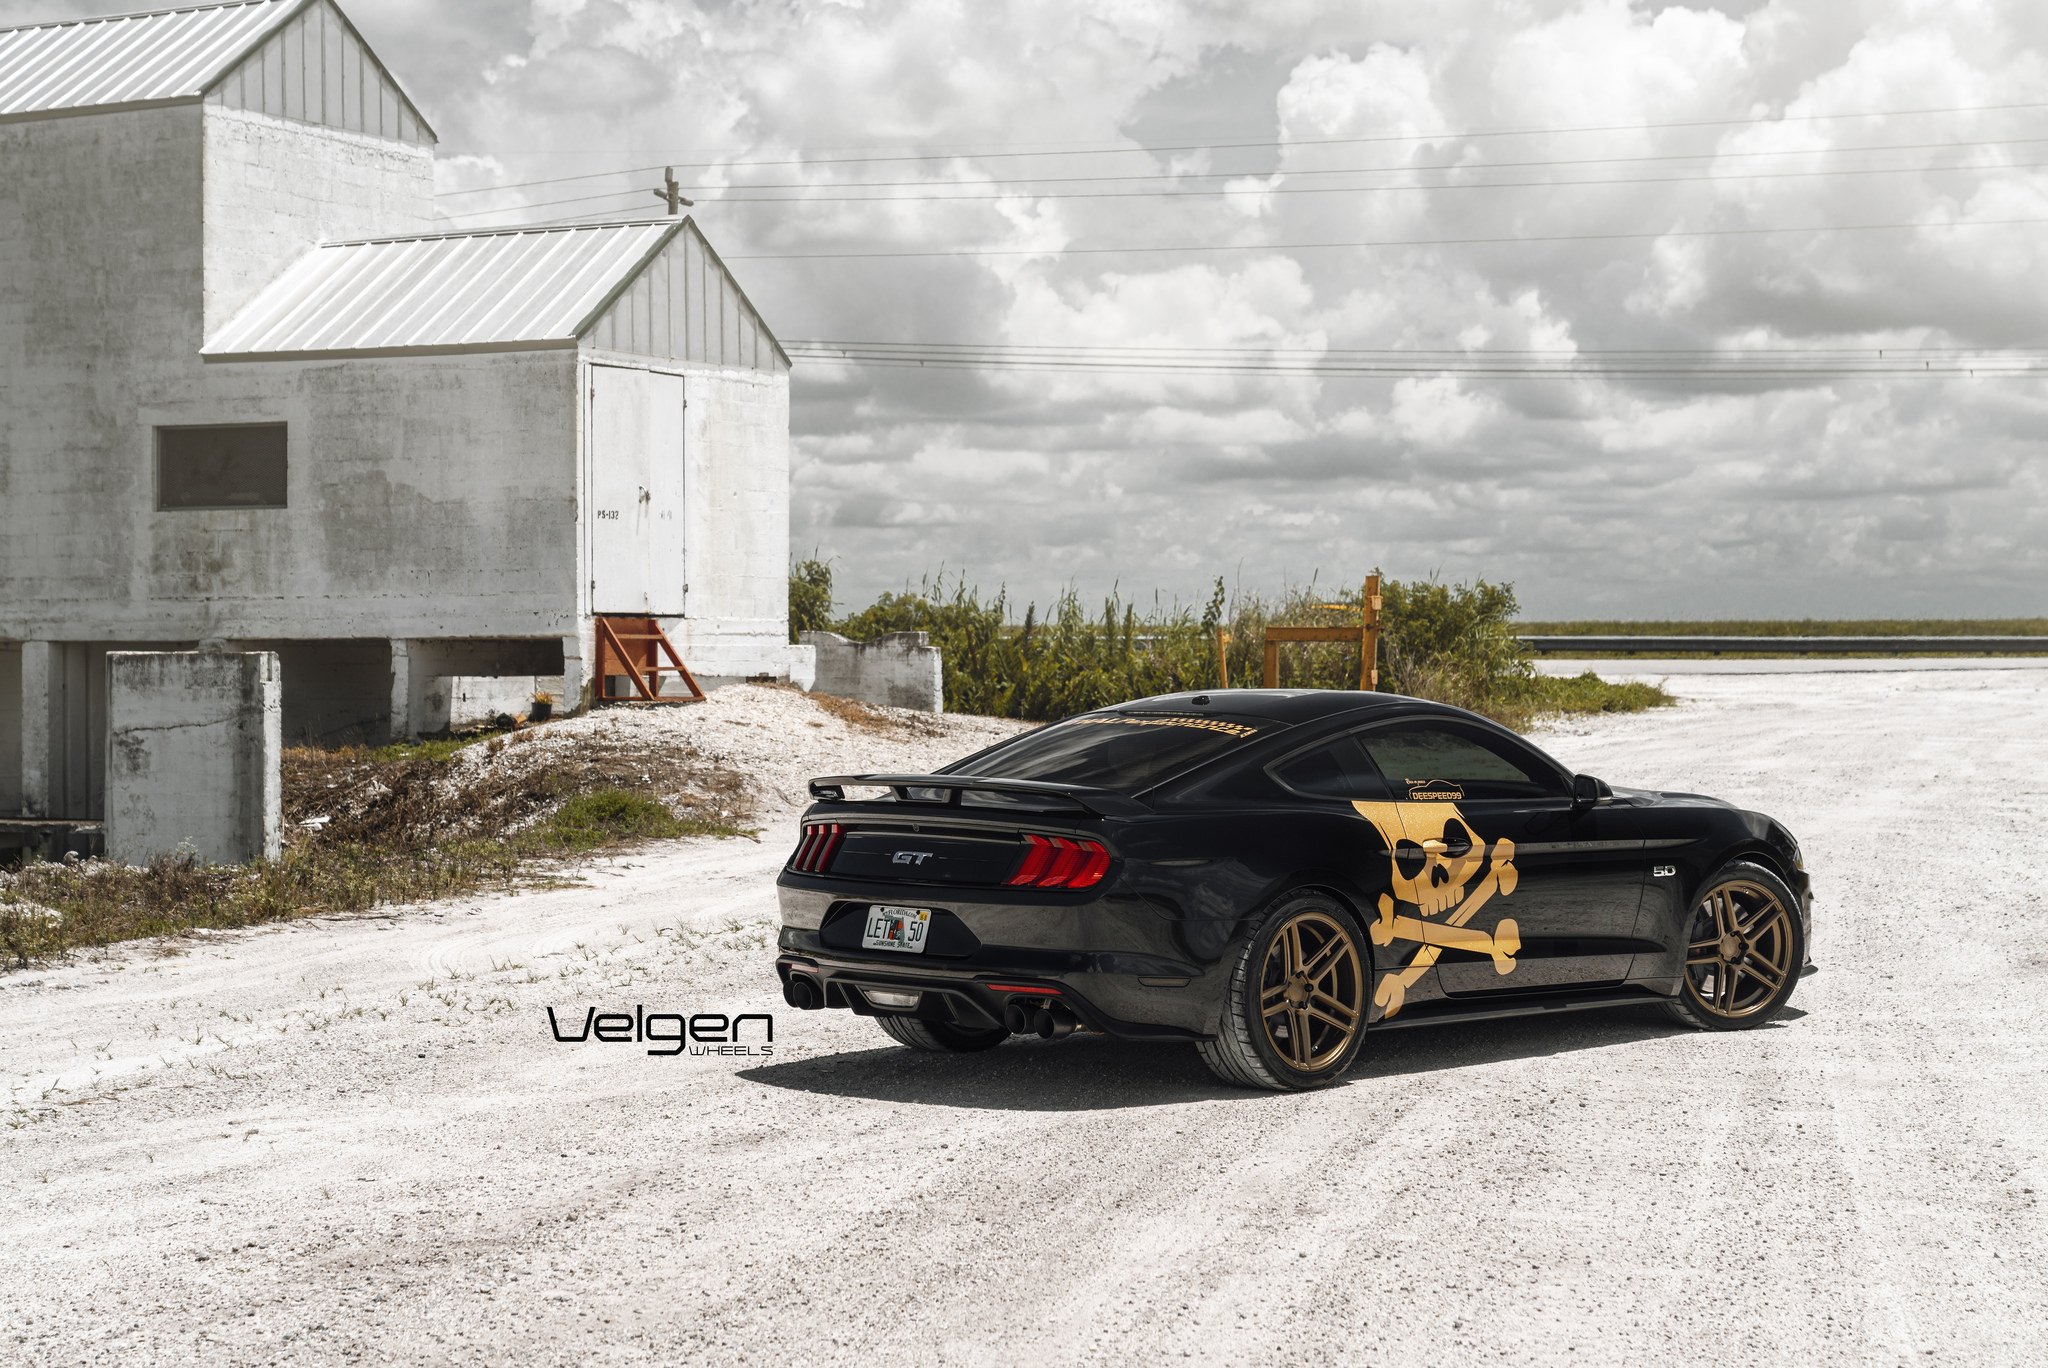 Aftermarket Rear Spoiler on Black Ford Mustang GT - Photo by Velgen Wheels